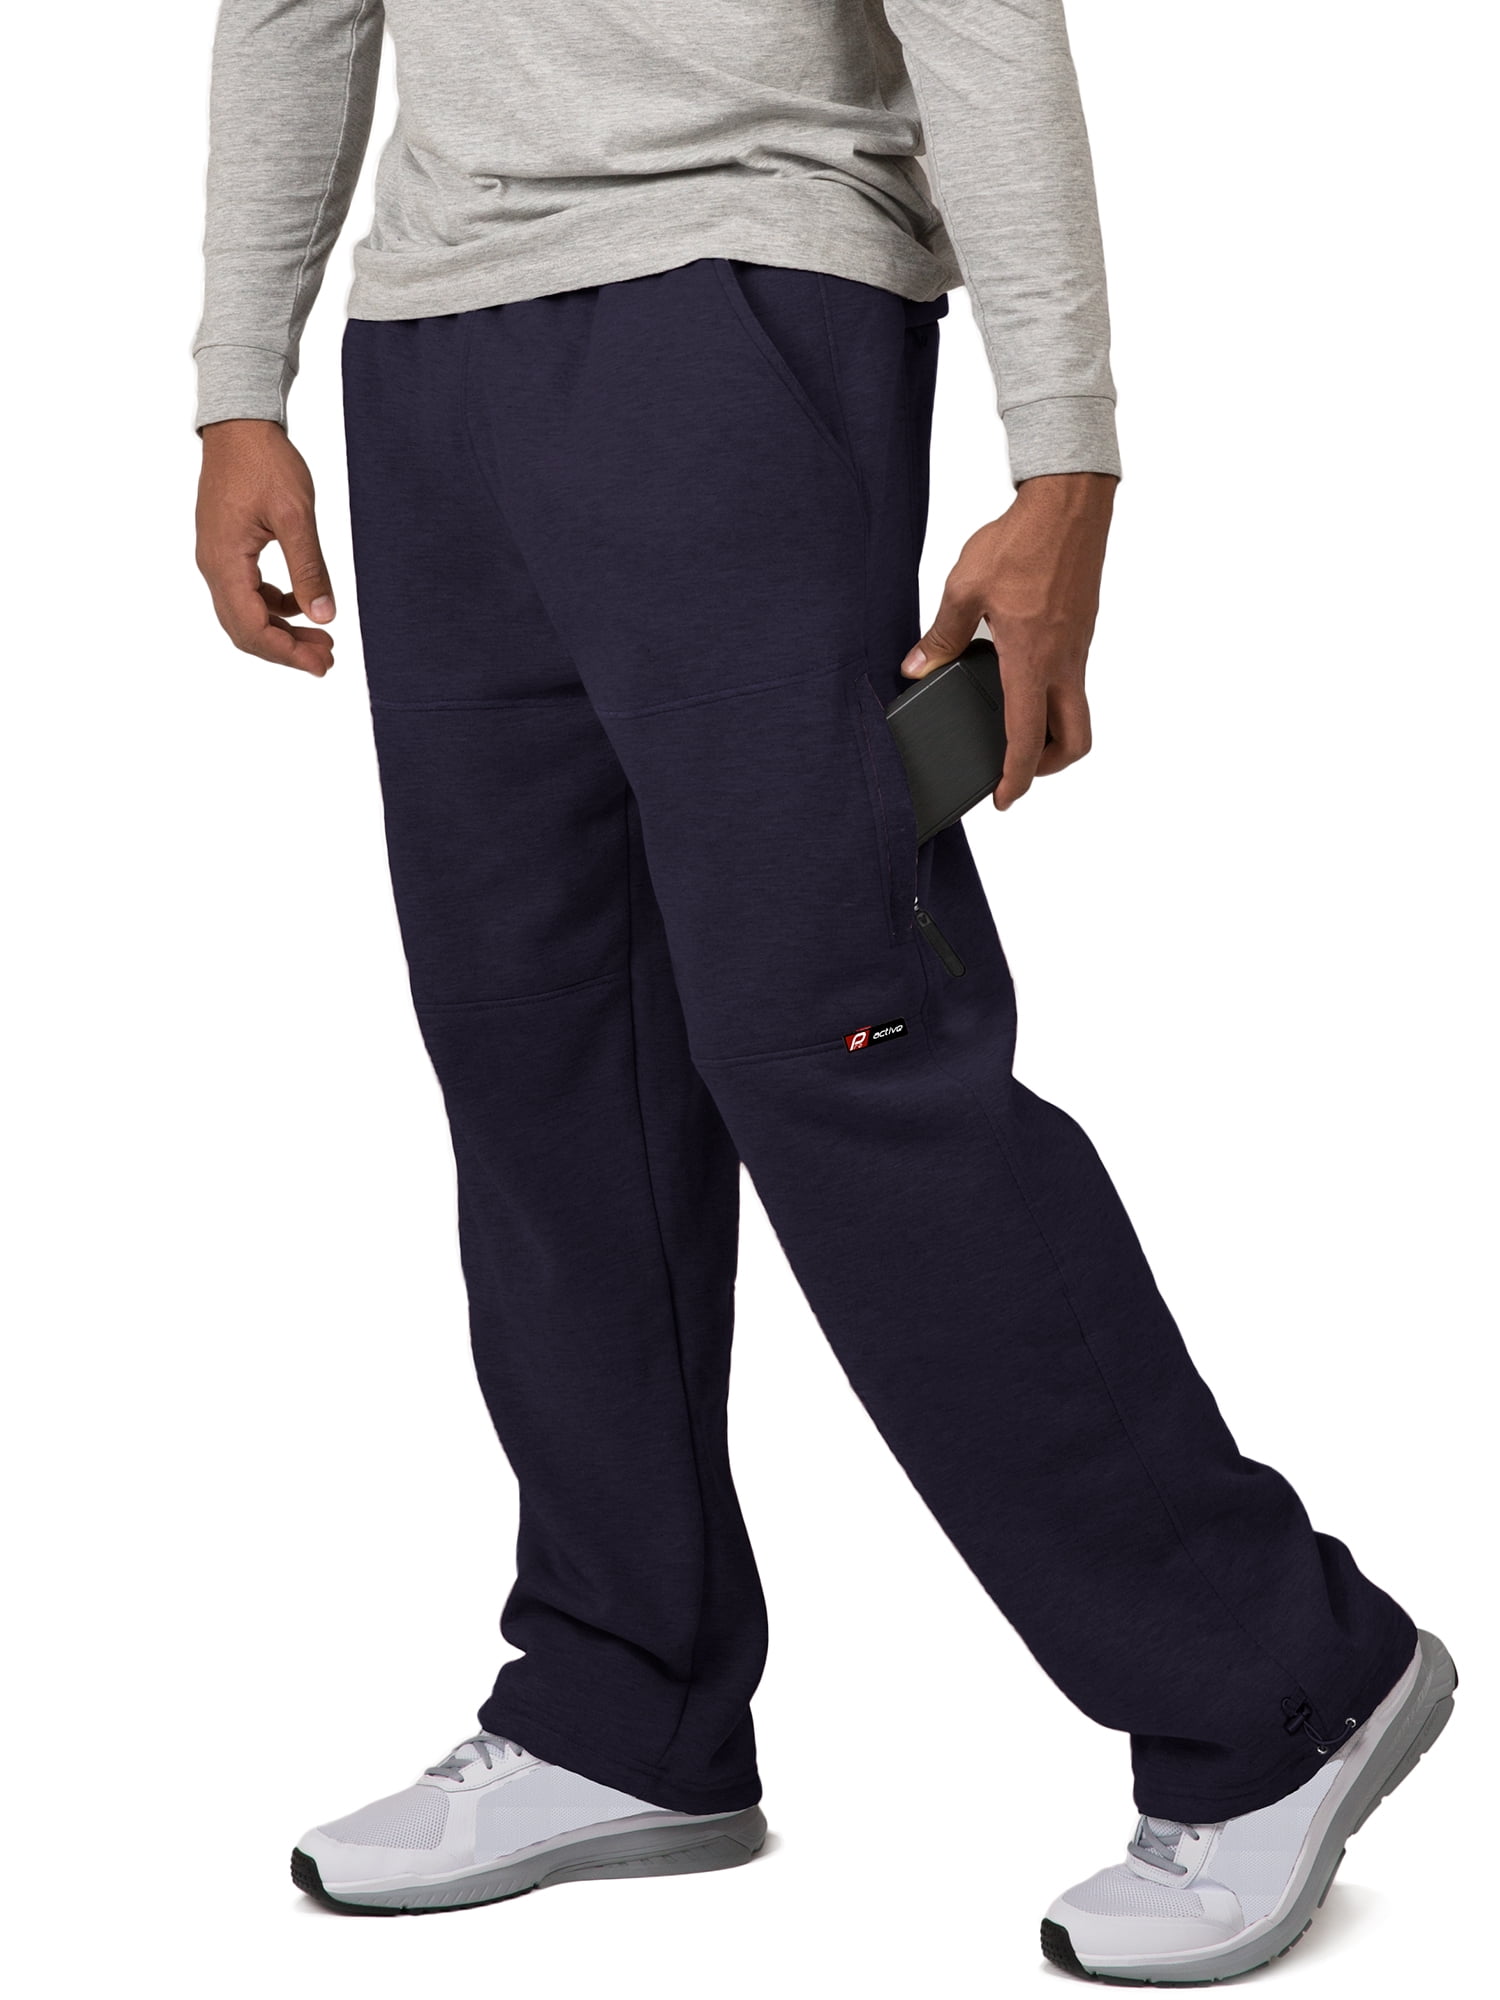 Louis Vuitton Mens Zipper Pocket Travel Joggers Sweatpants Navy Blue Size  Small